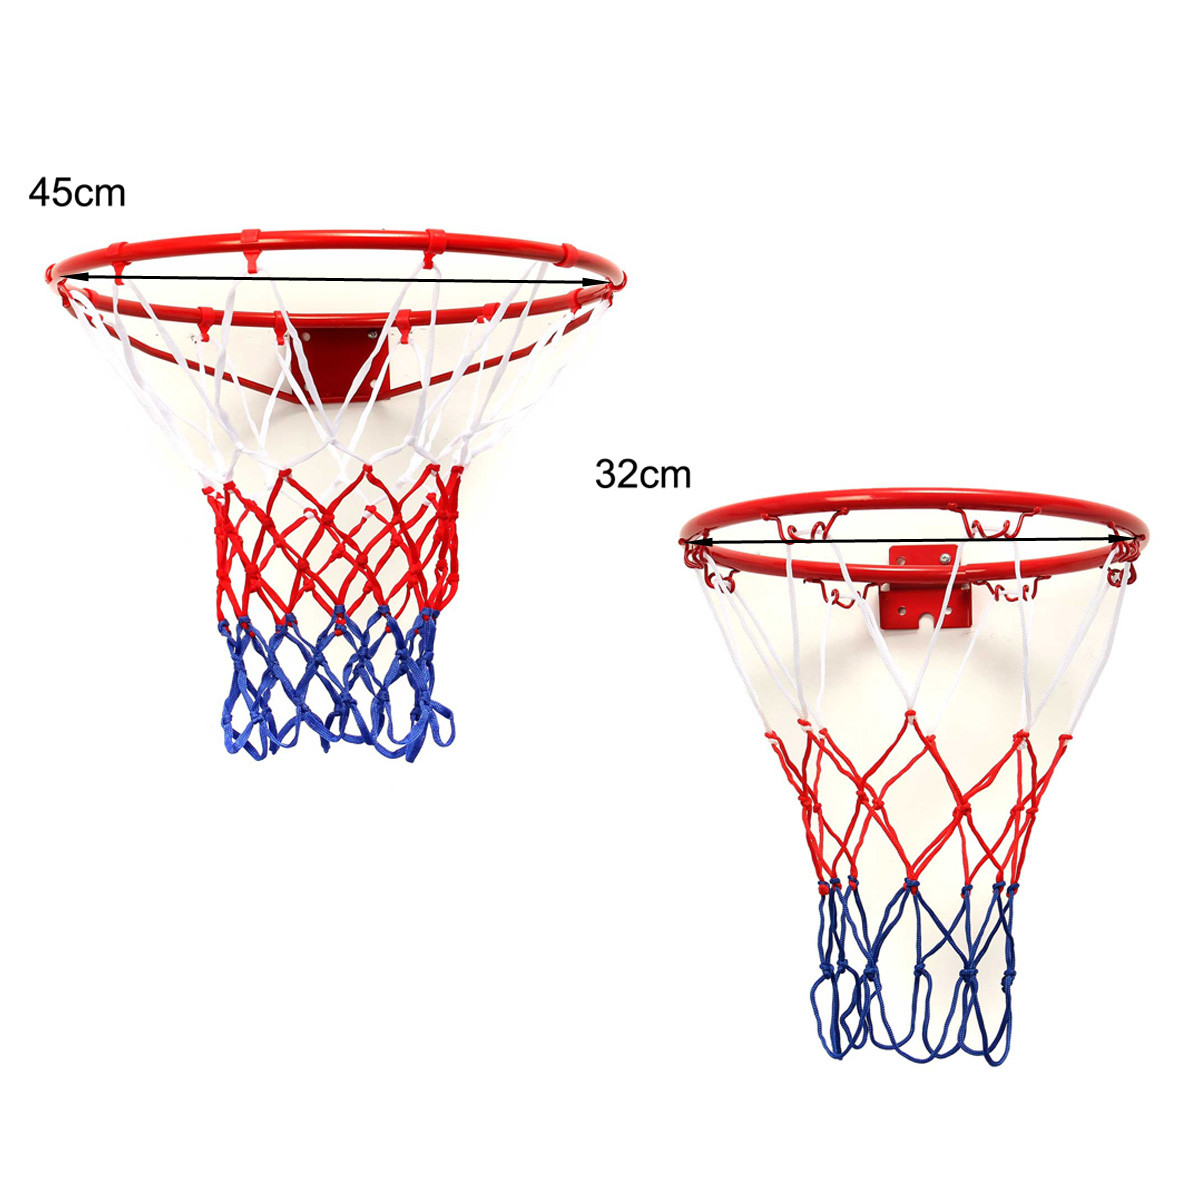 Wall-Mounted-Hanging-Basketball-Goal-Hoop-Rim-Metal-Netting-1040840-6